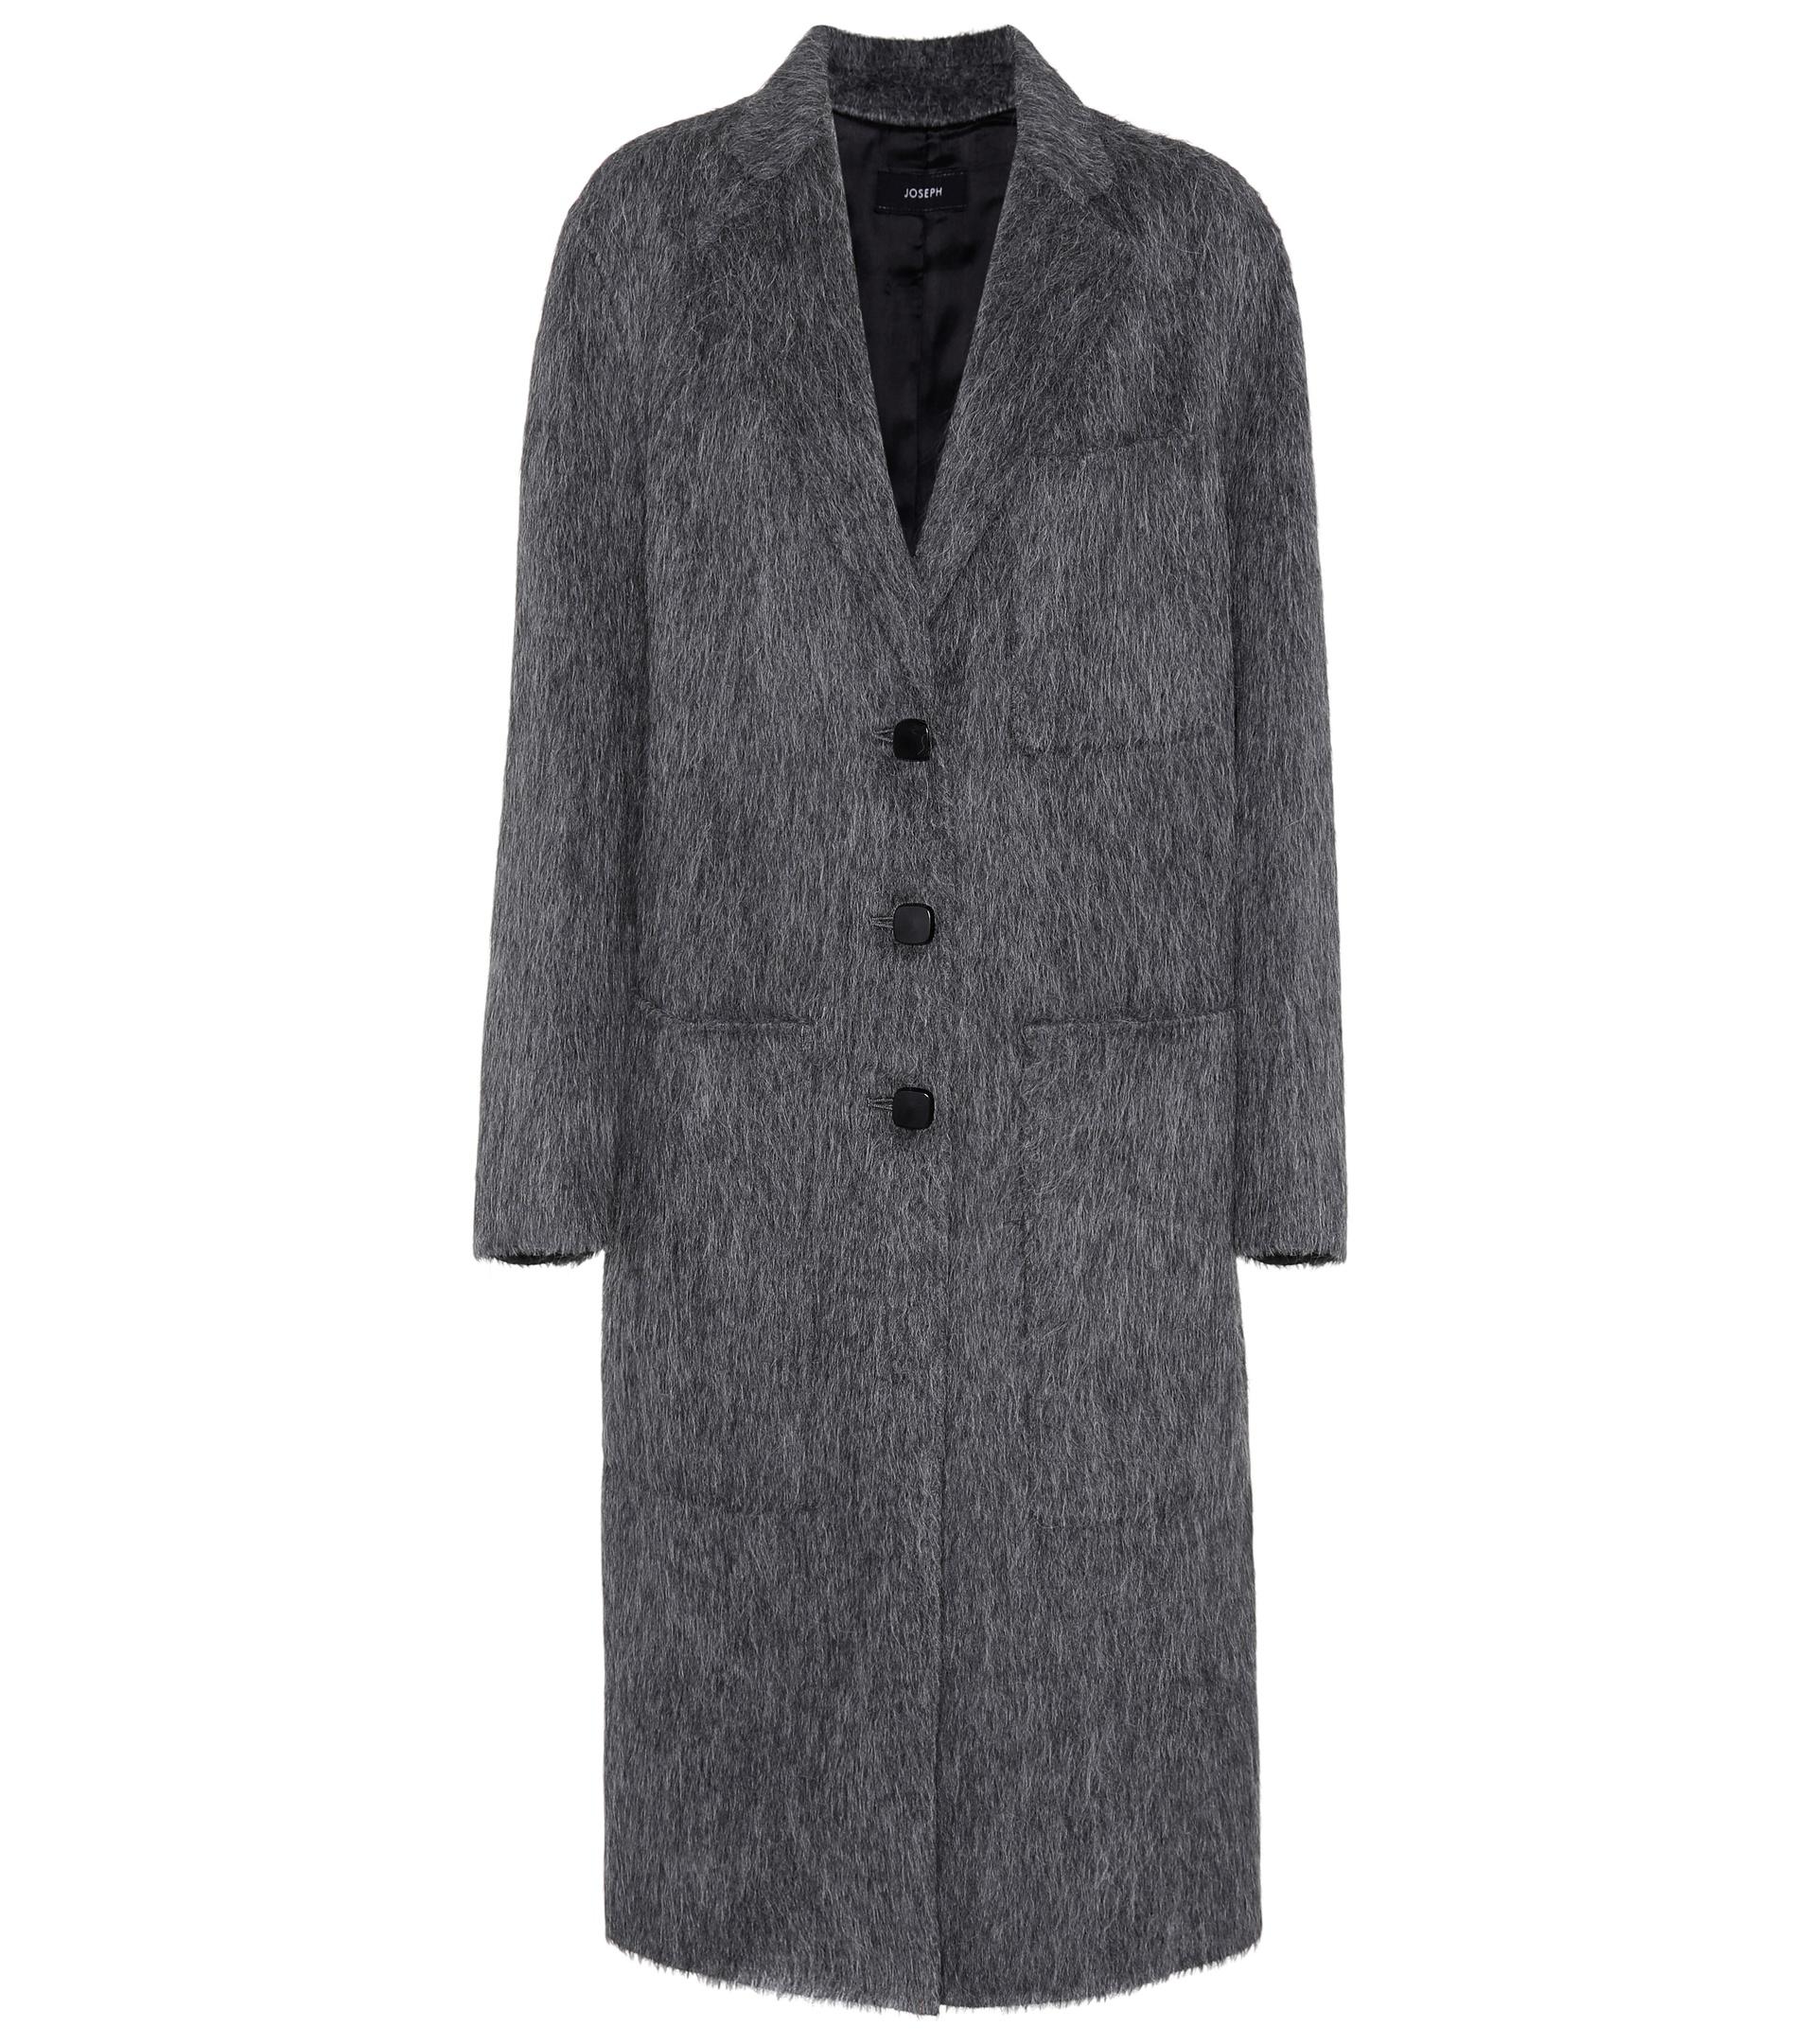 JOSEPH Wool And Alpaca-blend Coat in Gray - Lyst